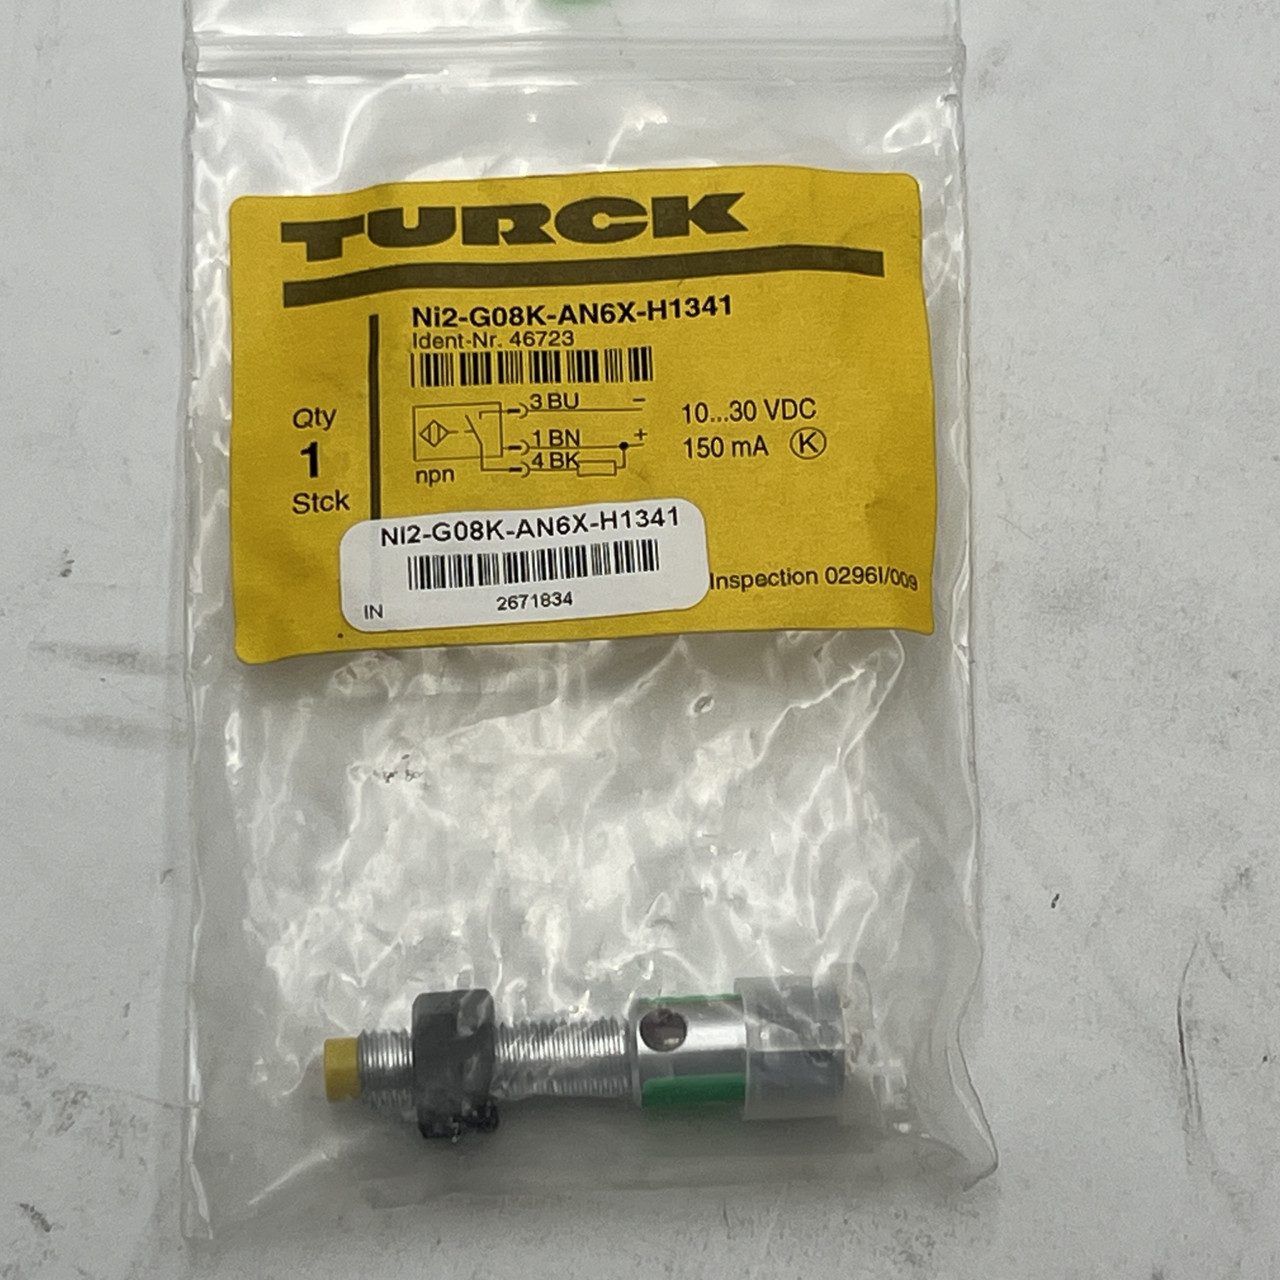 TURCK NI2-G08K-AN6X-H1341 Proximity Sensor  - NEW